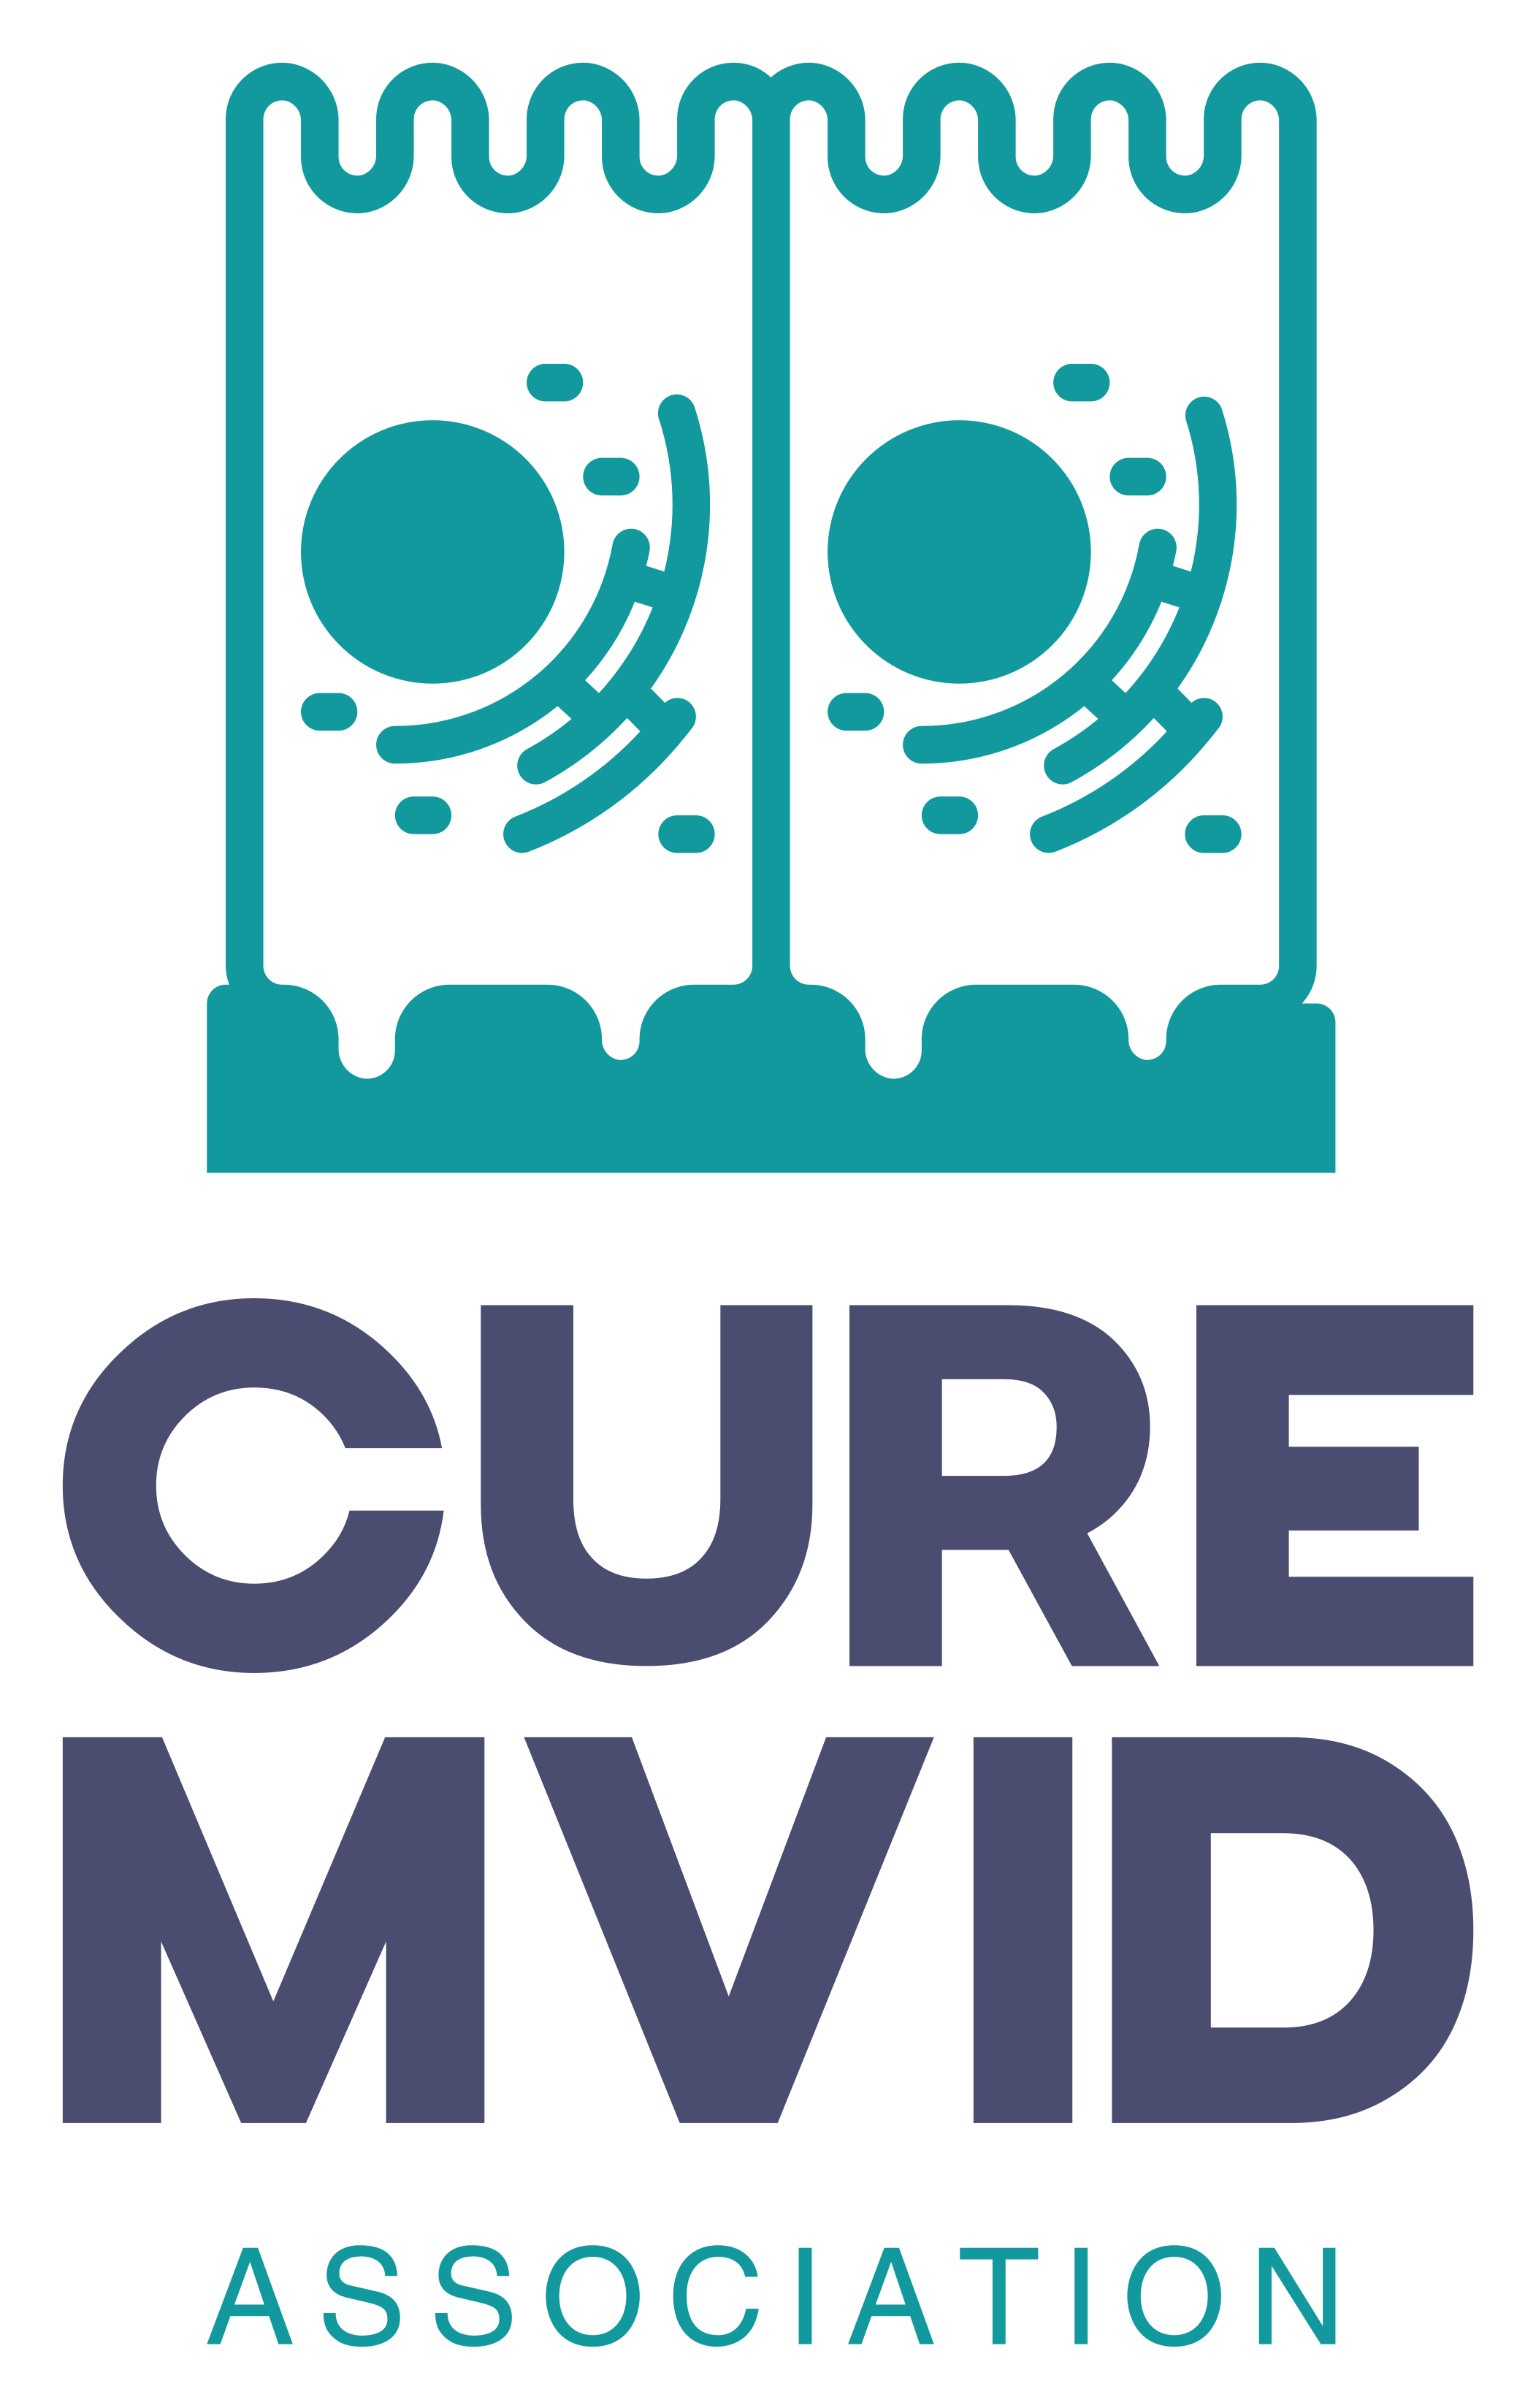 Association Cure MVID